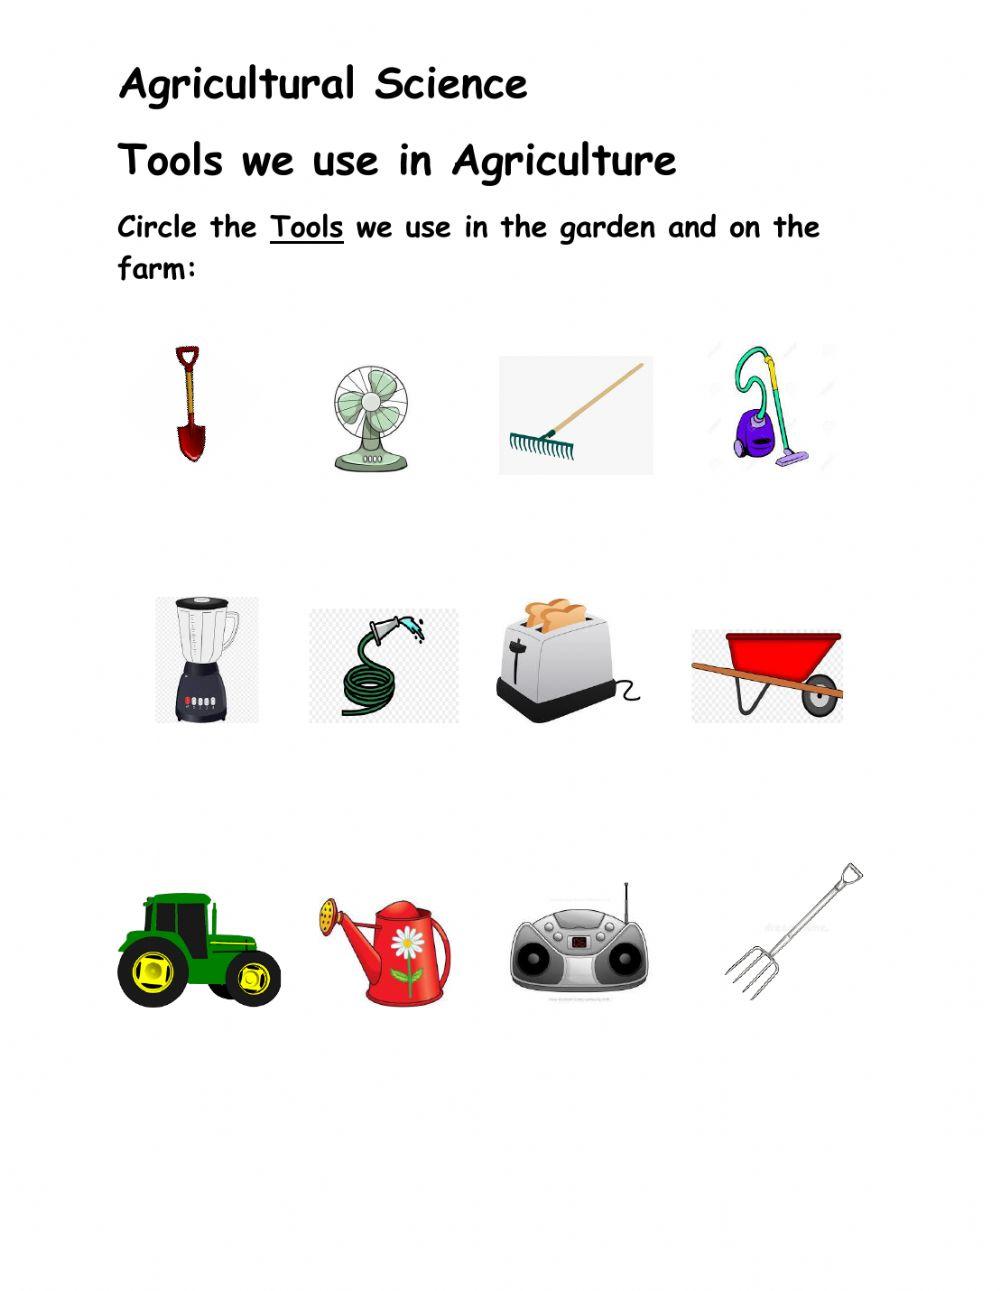 Gardening and Farming Tools